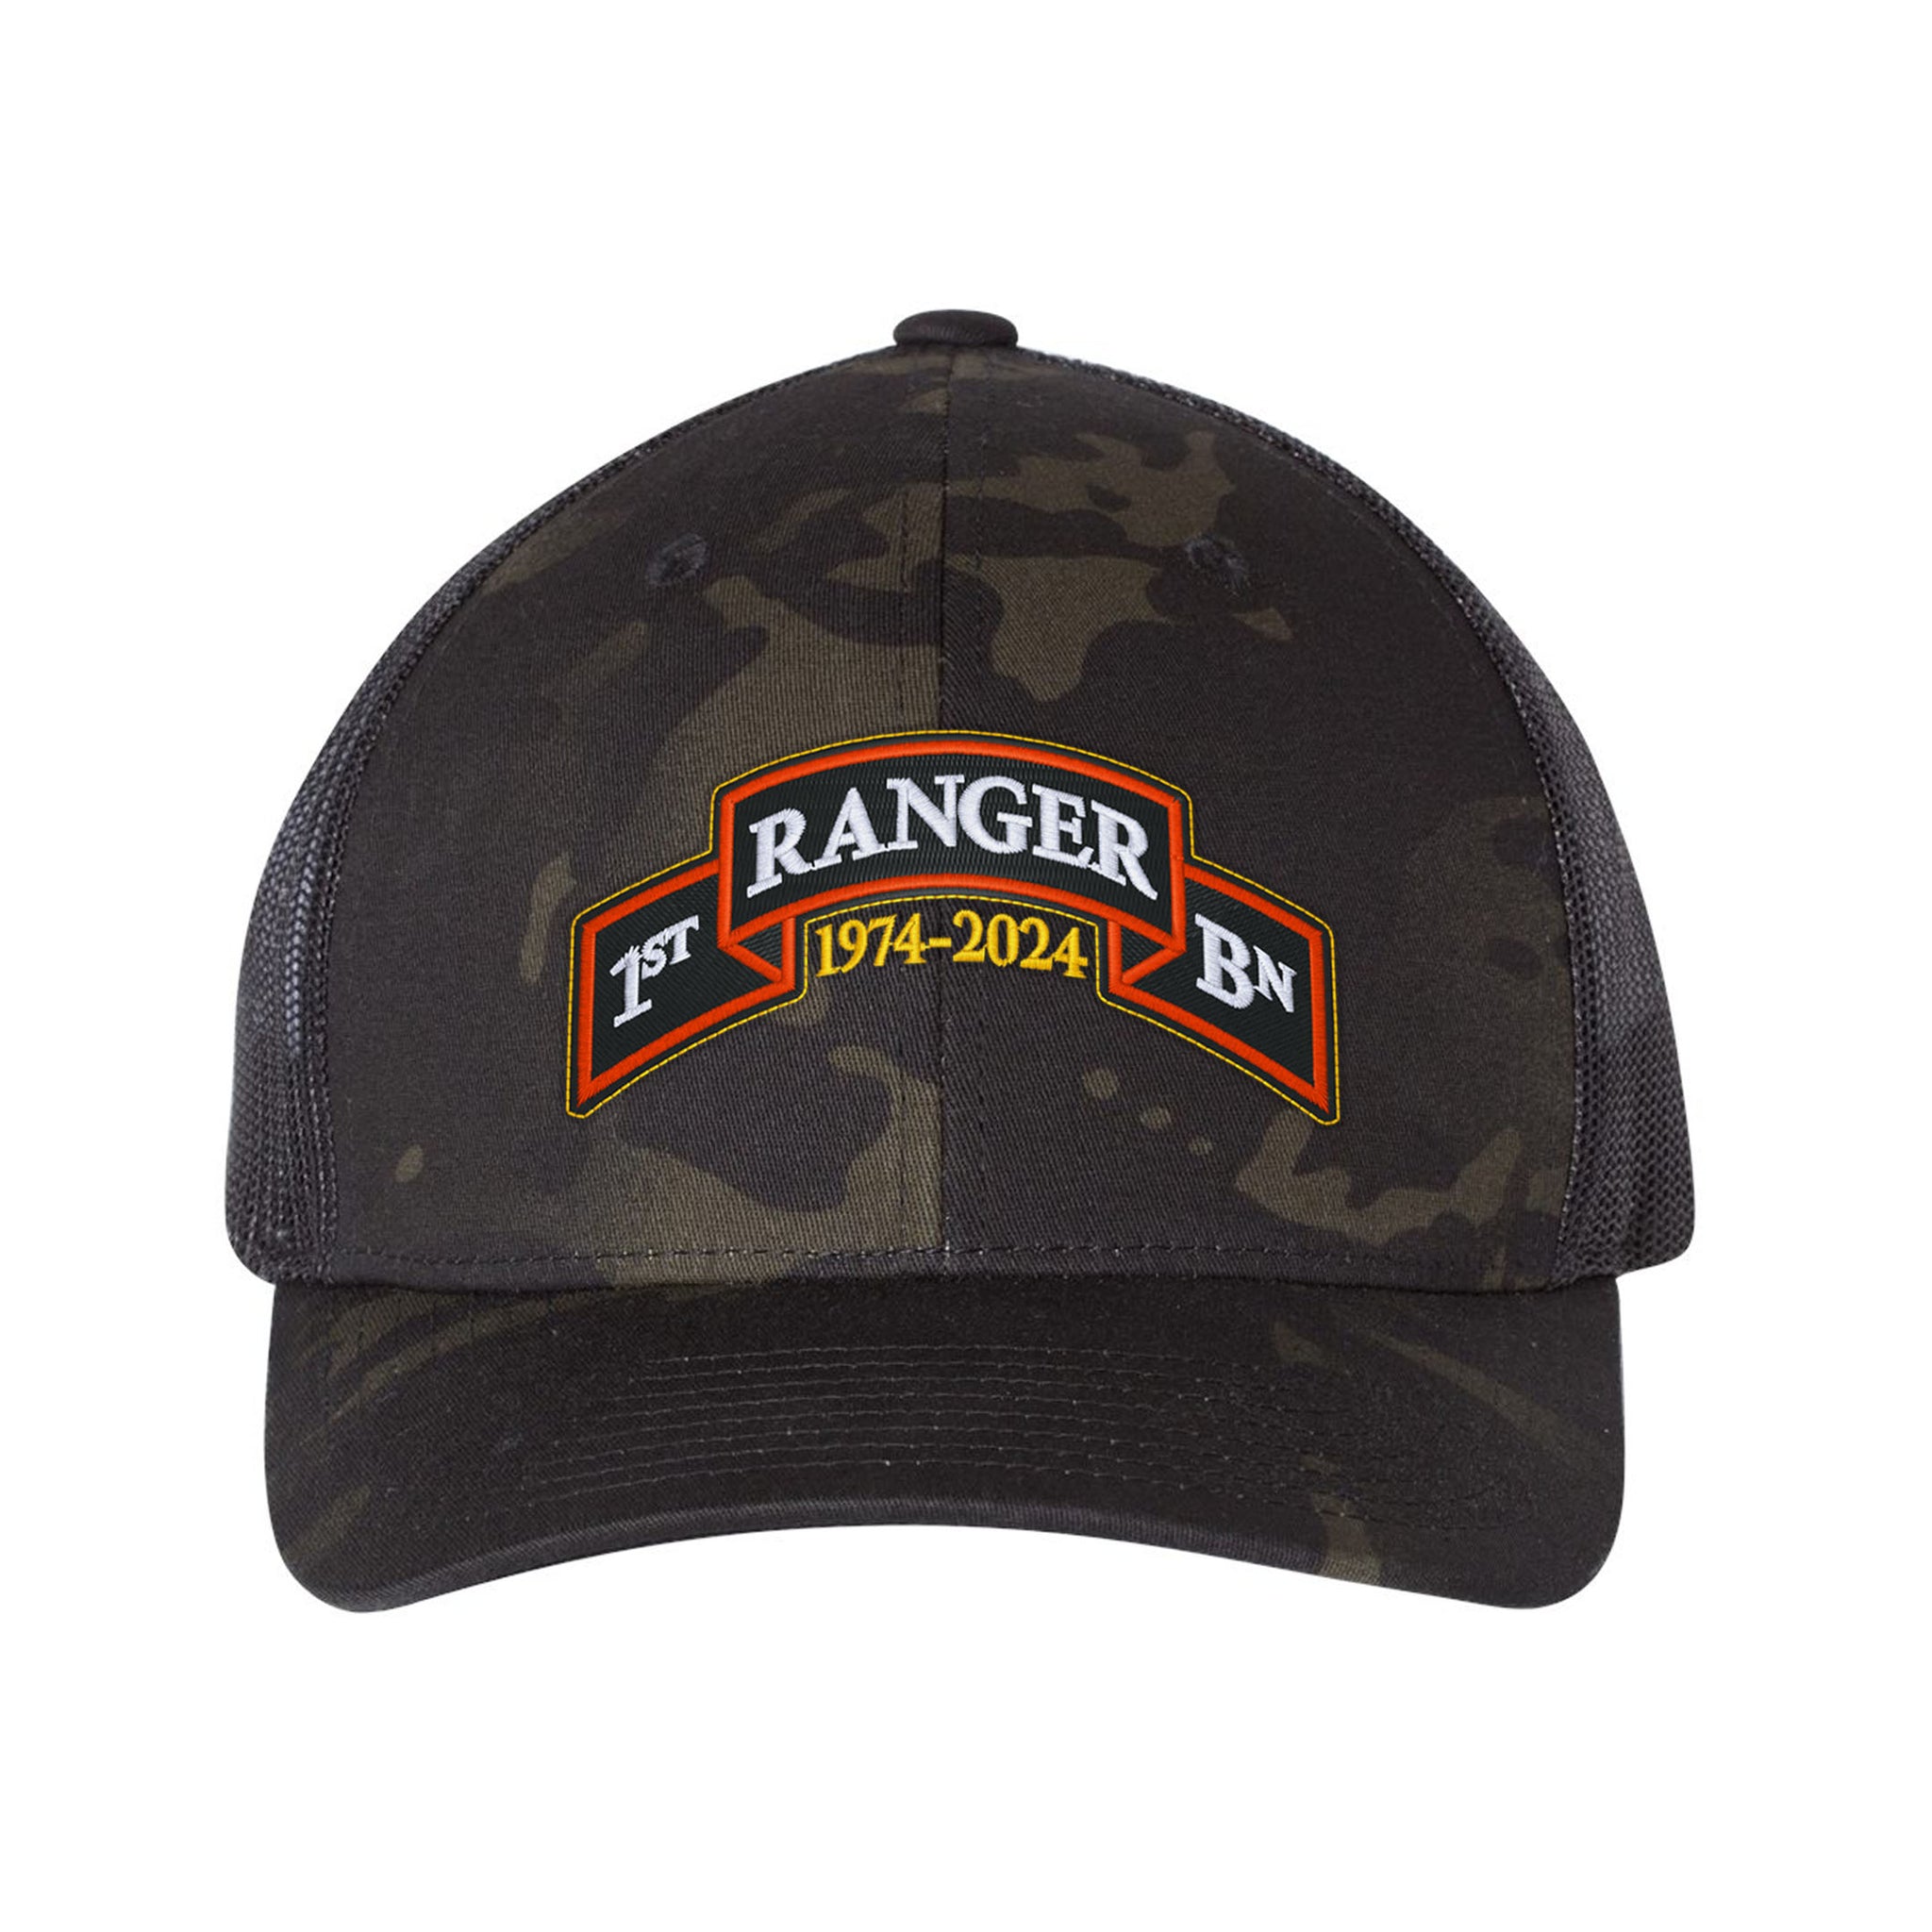 Run Gun Ranger RWB Shaker Bottle - American Trigger Pullers